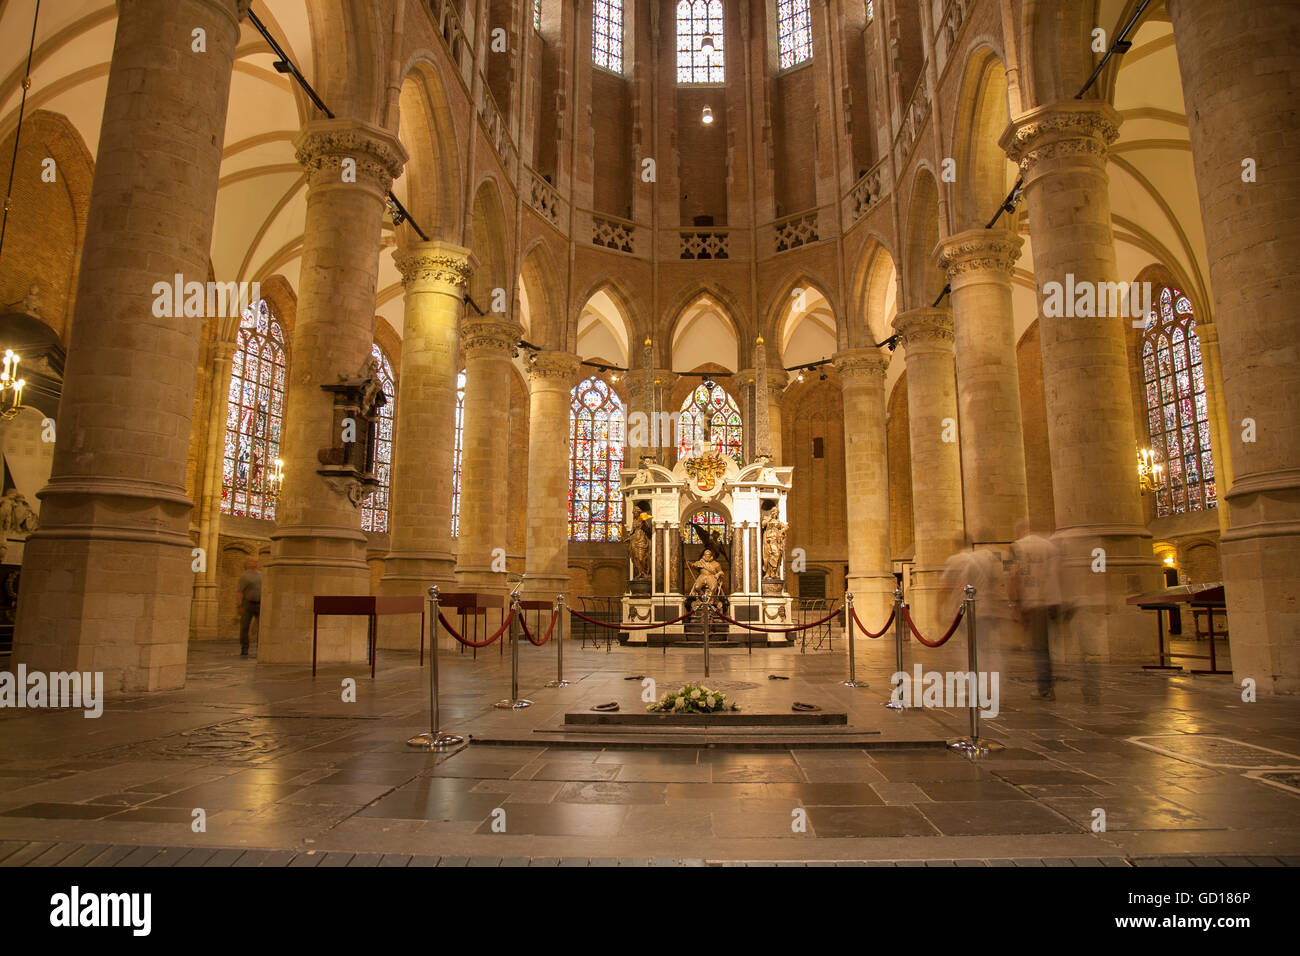 La Tumba de Guillermo de Orange, Nieuwe Kerk (Iglesia Nueva; Delft, Holanda;  Holanda; Europa Fotografía de stock - Alamy